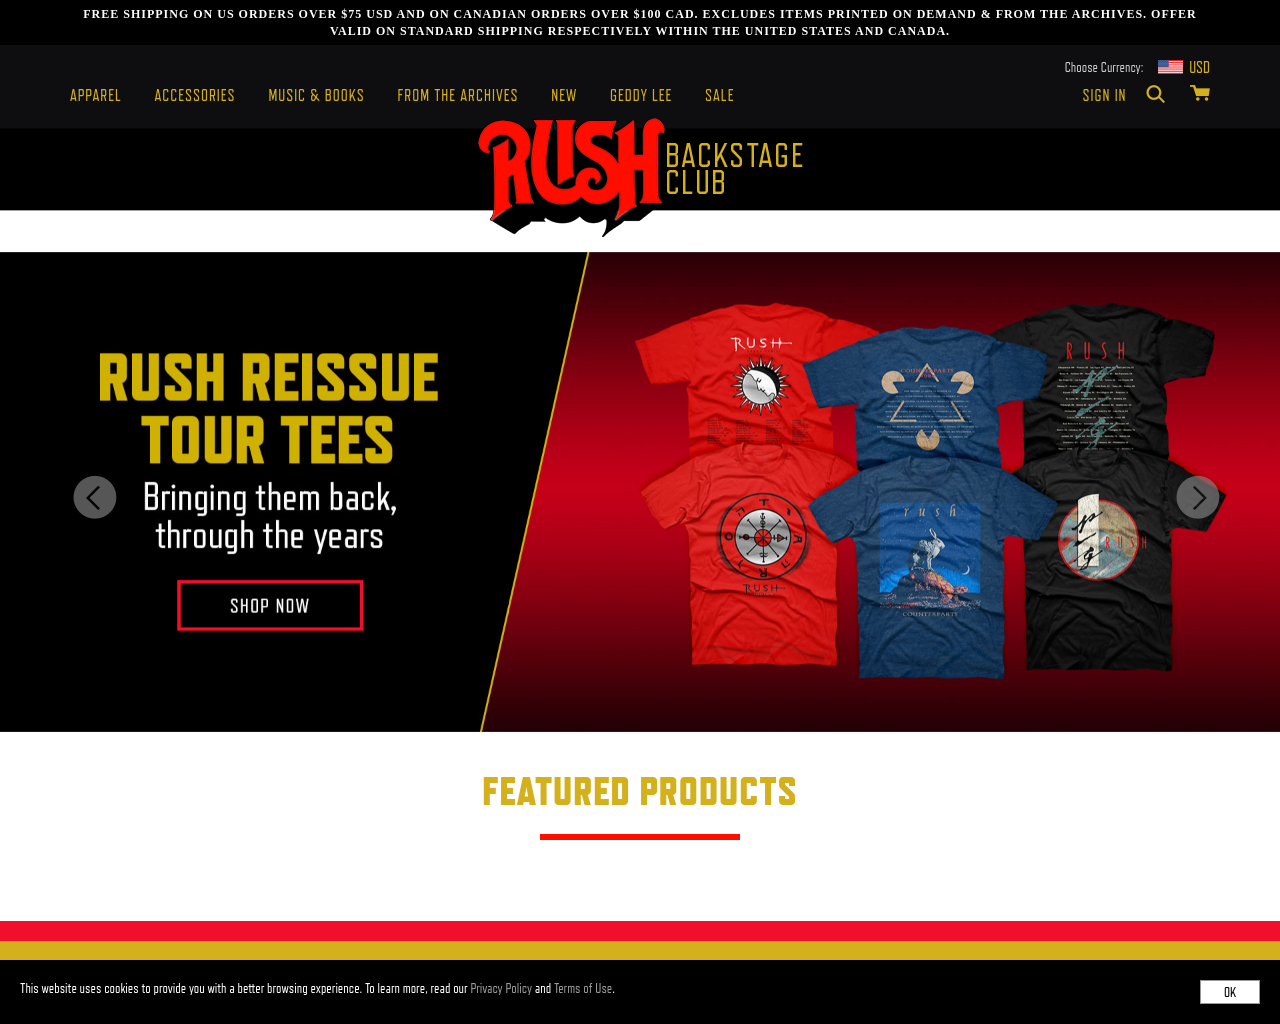 rushbackstage.com